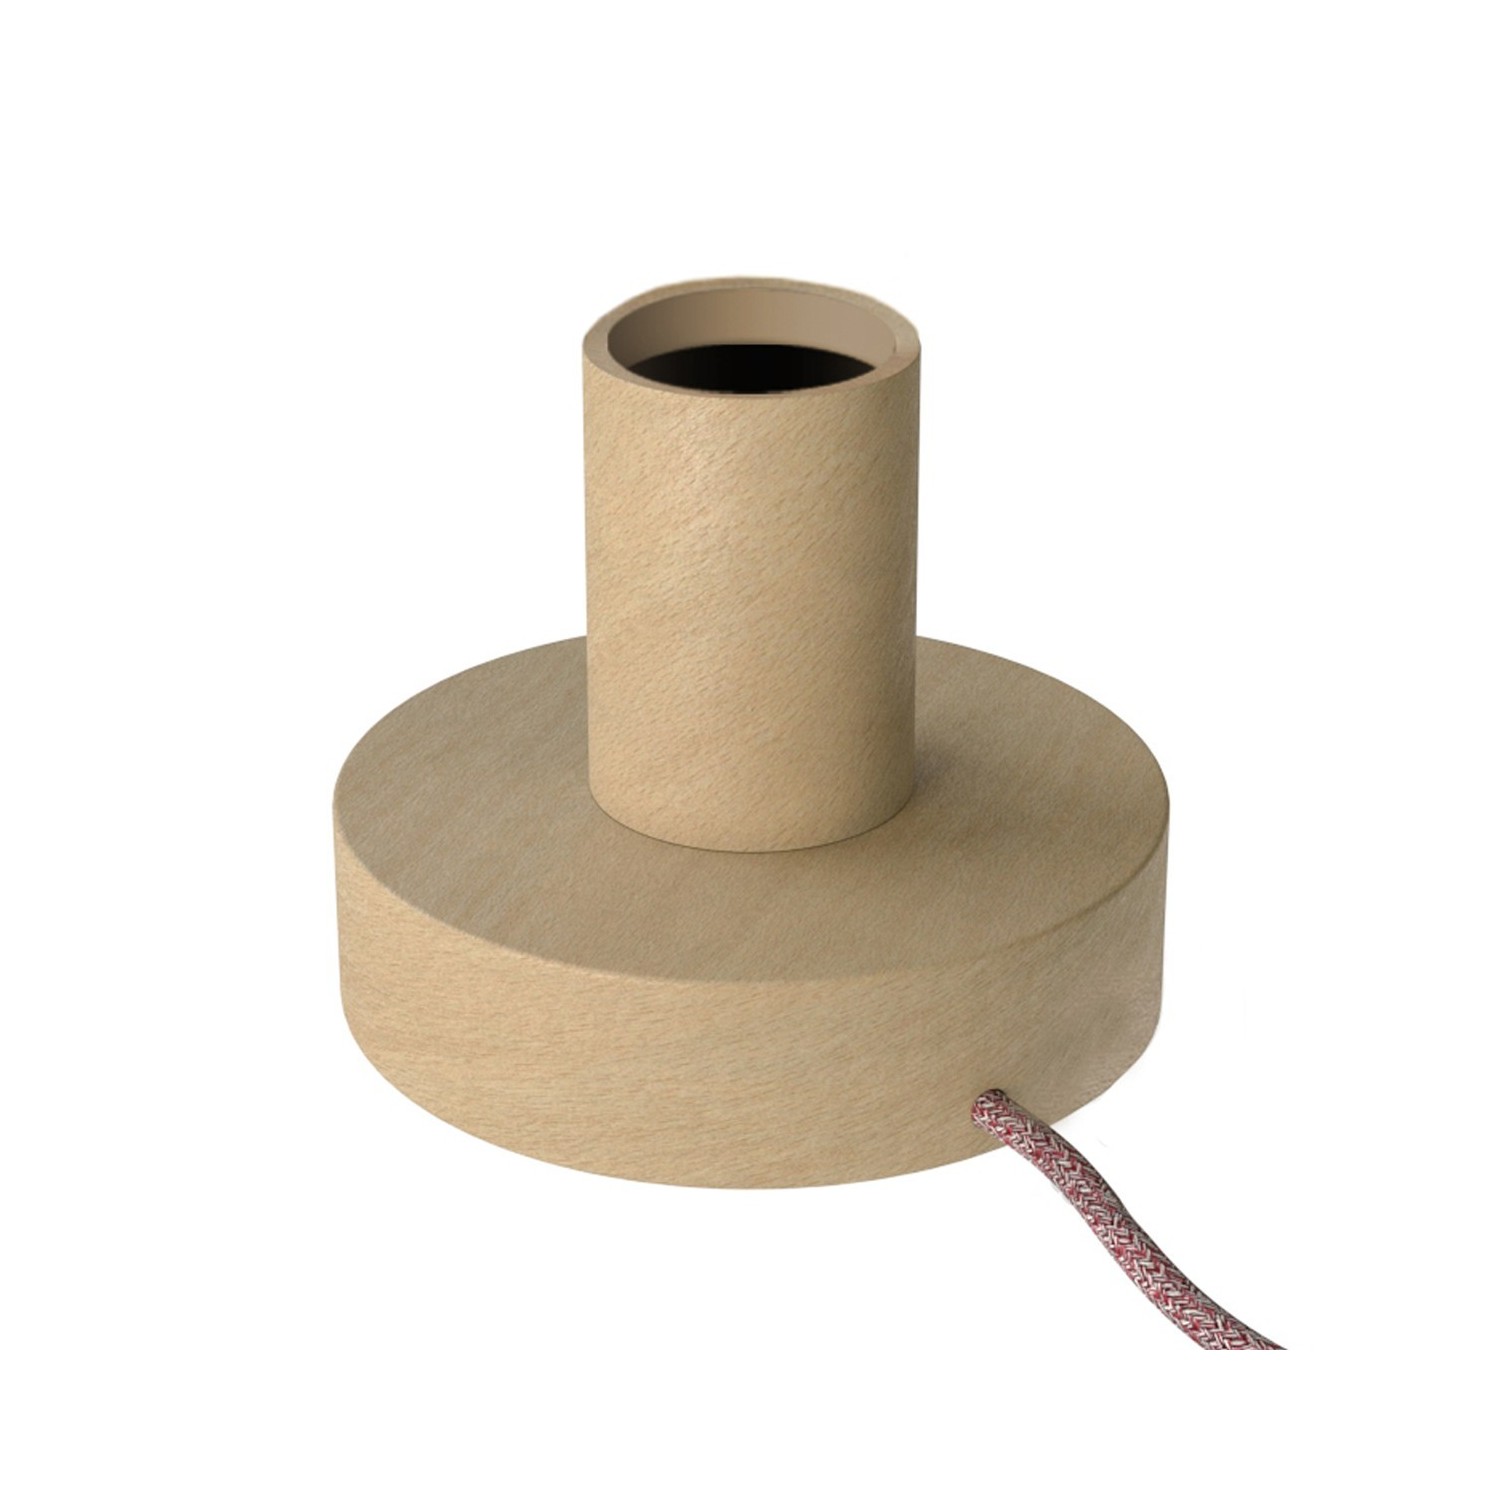 Posaluce - Small wooden Table Lamp